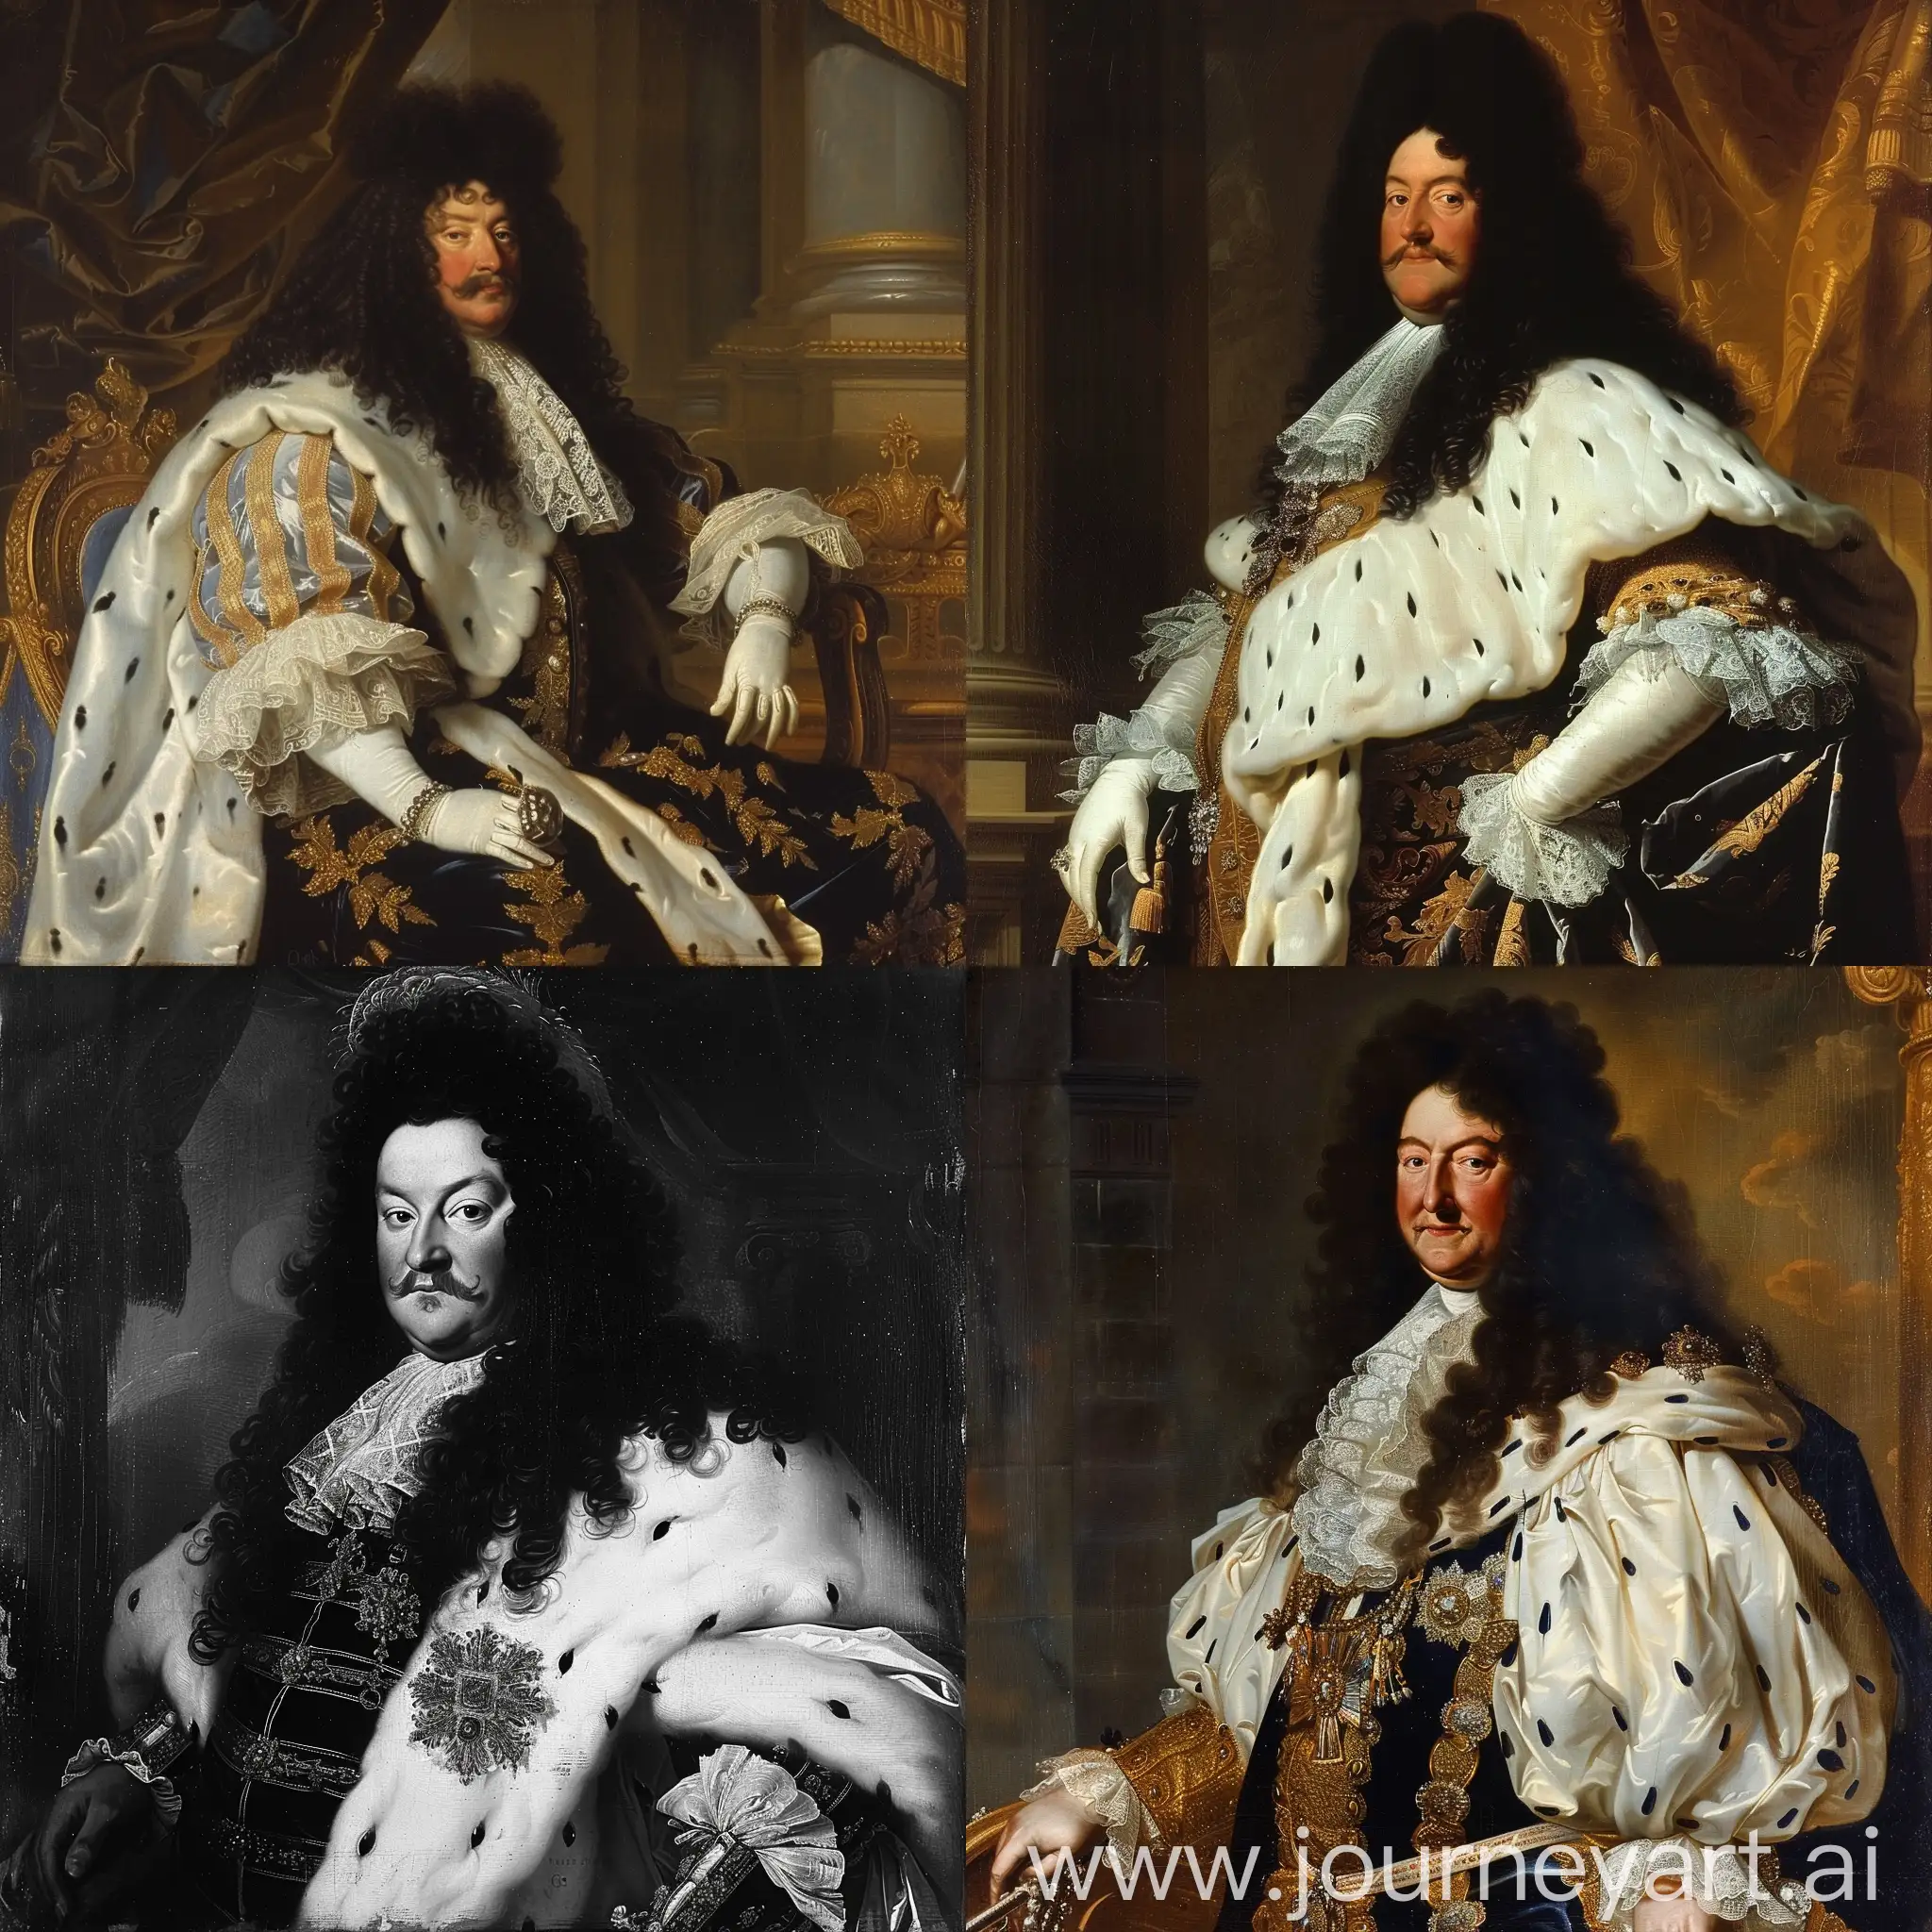 King-Louis-XIV-Portrait-with-Ornate-Attire-and-Royal-Emblem